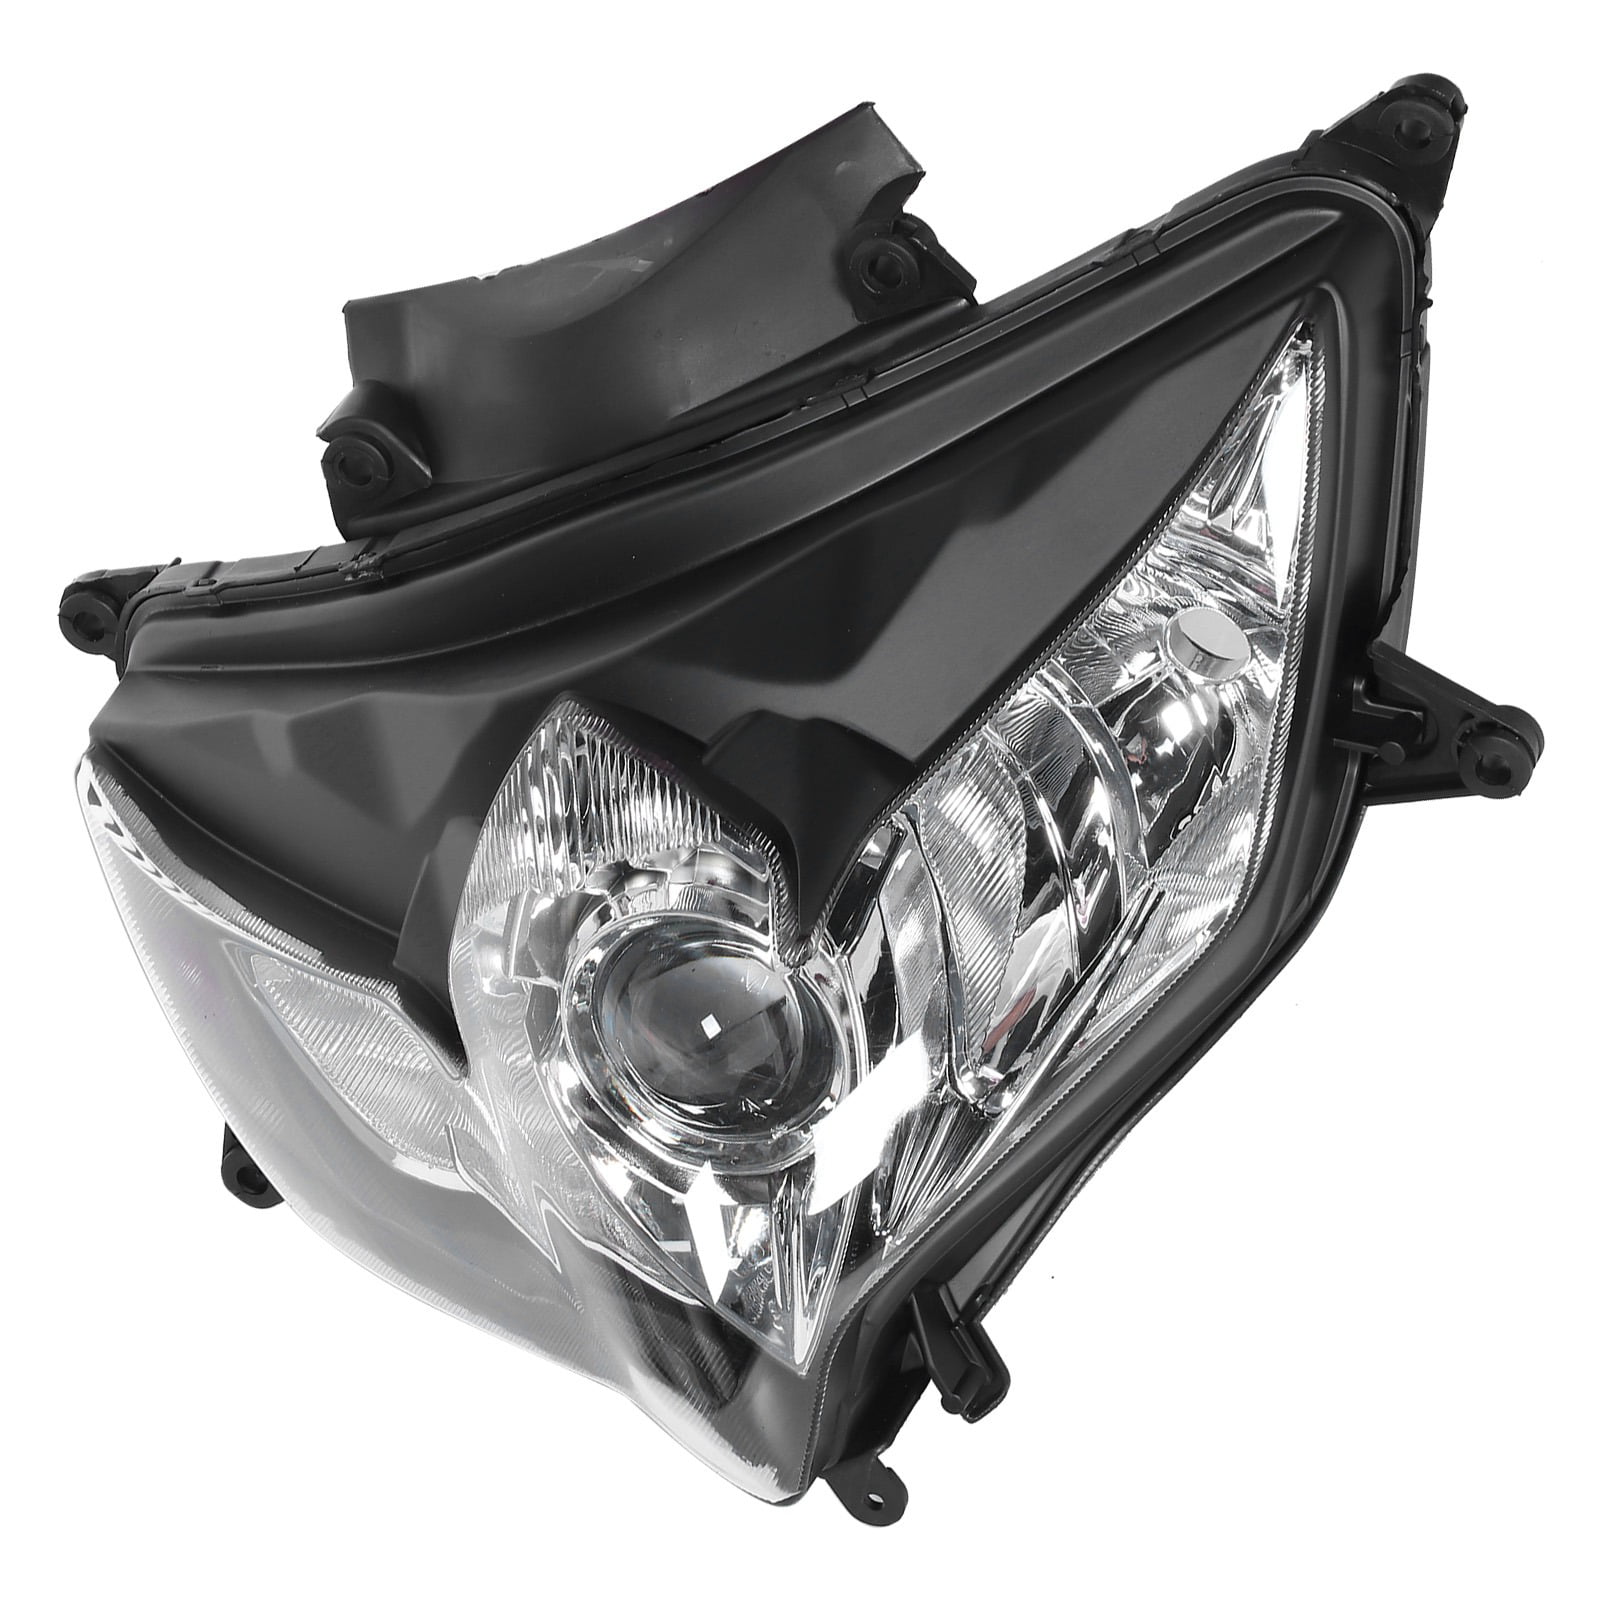 Front Headlight Head Light Lamp Assembly For Suzuki GSXR600 GSXR750 2008-2010 US 